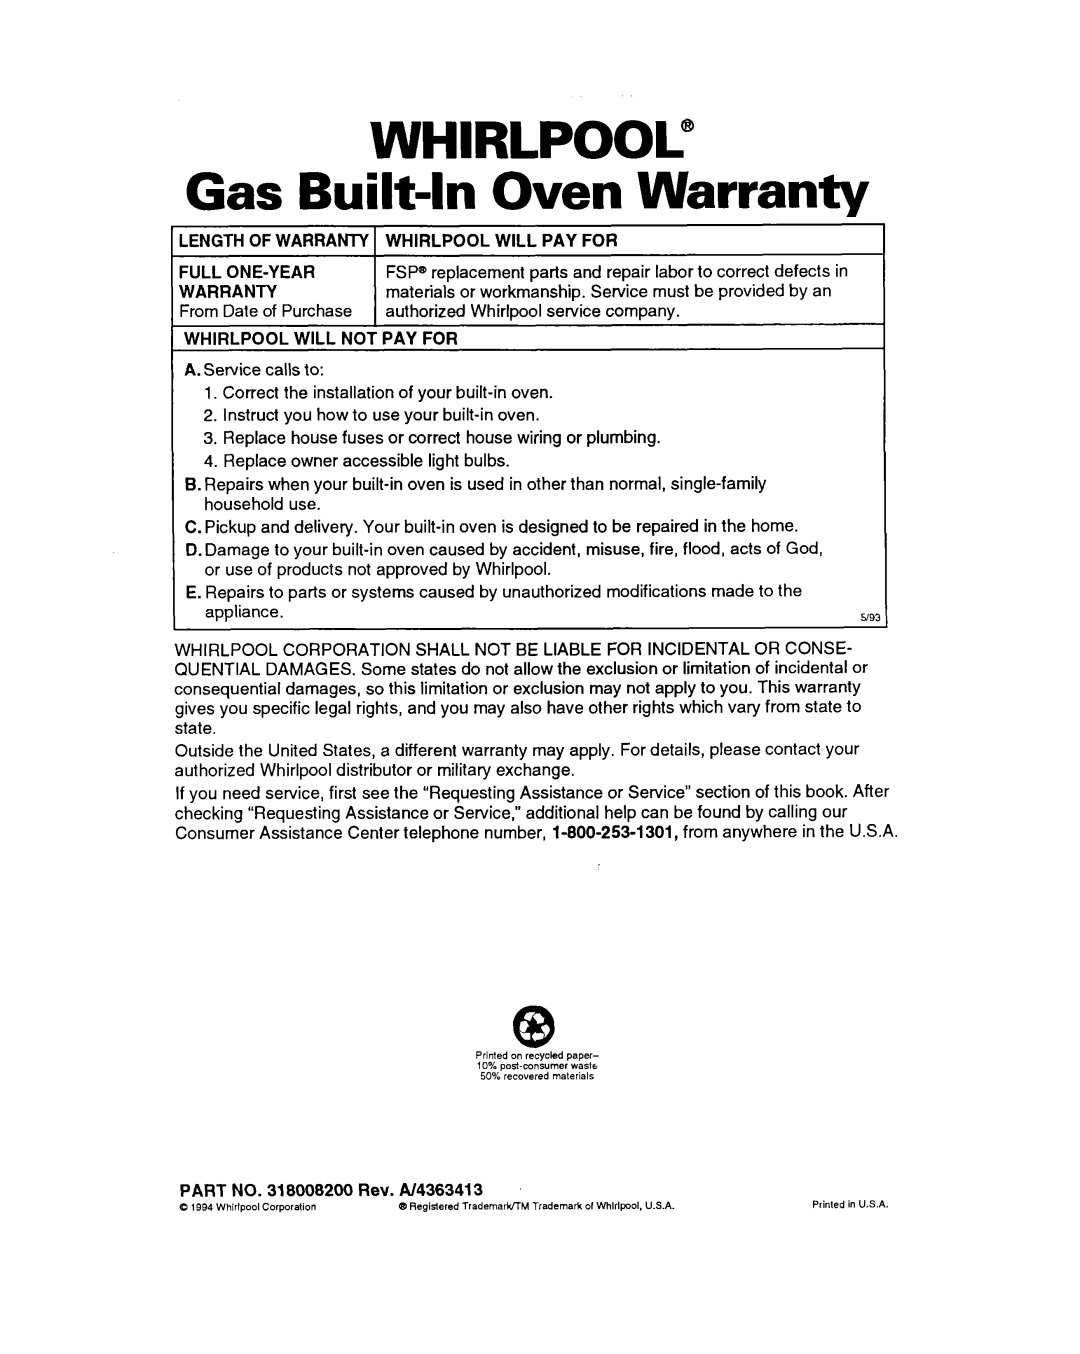 Whirlpool SBIOOPED, SBISOPED warranty WHIRLPOOL” Gas Built-InOven Warranty 